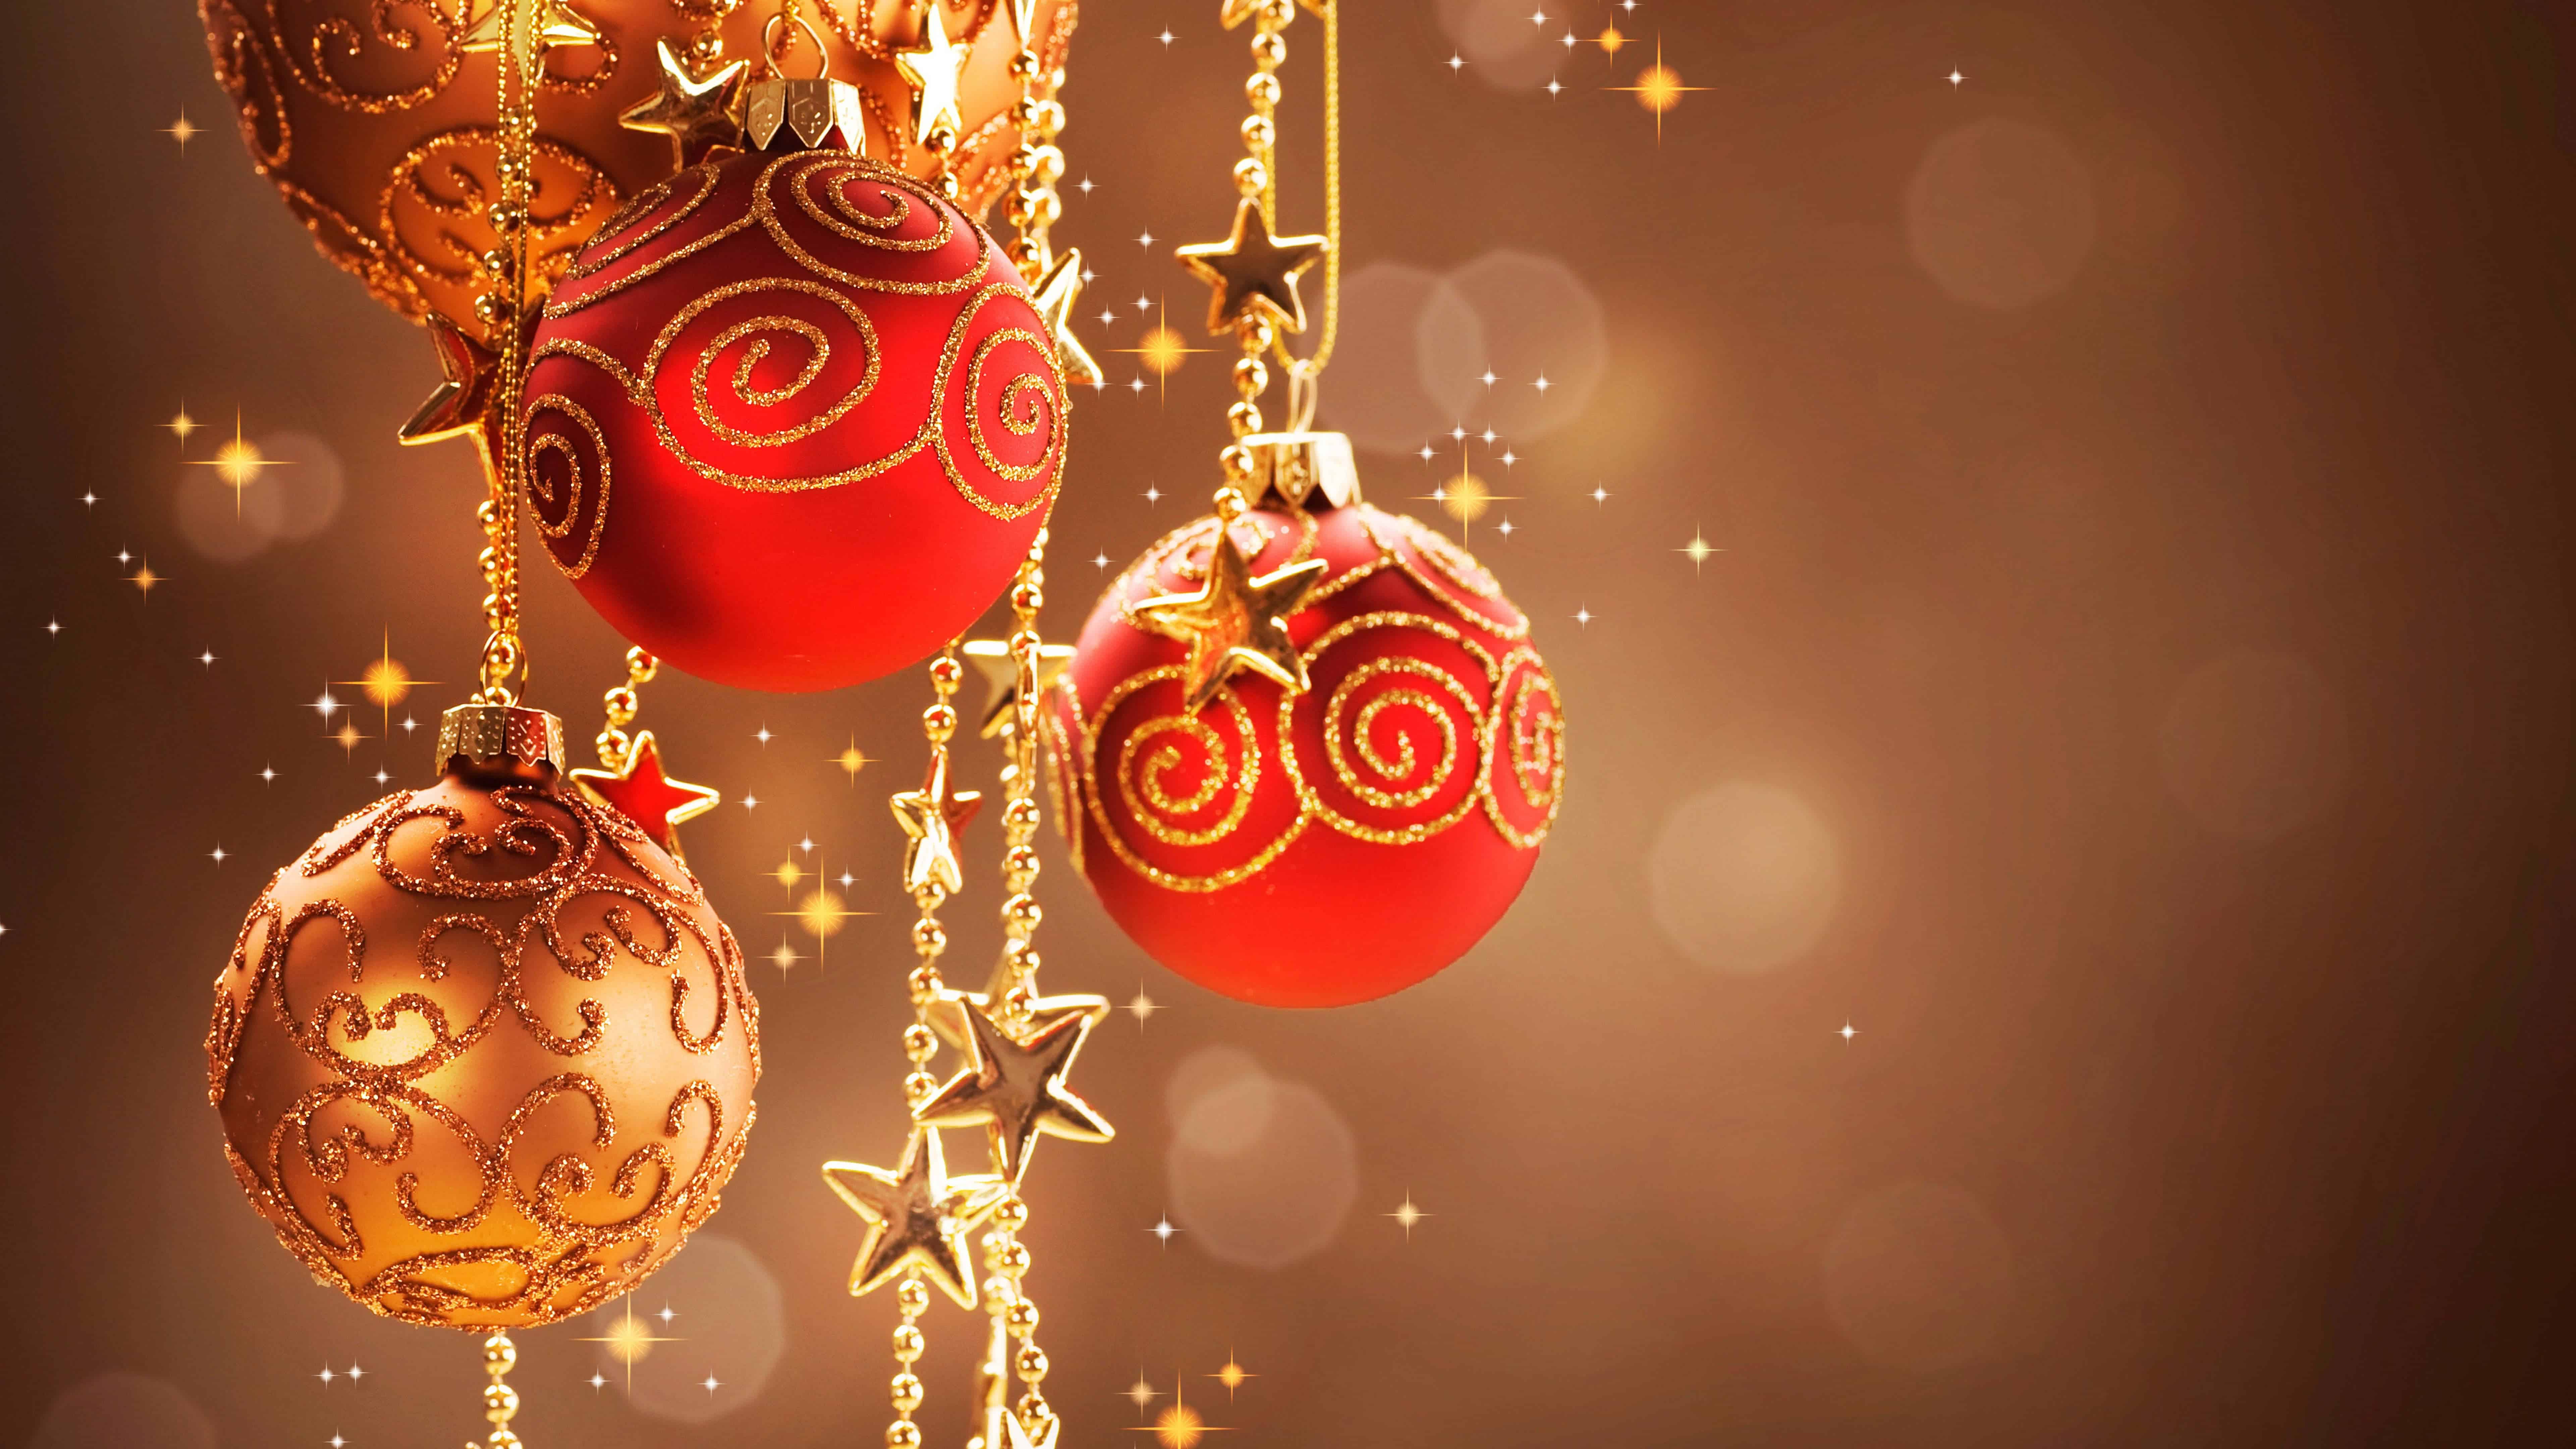 Red And Gold Christmas Tree Balls UHD 8K Wallpaper